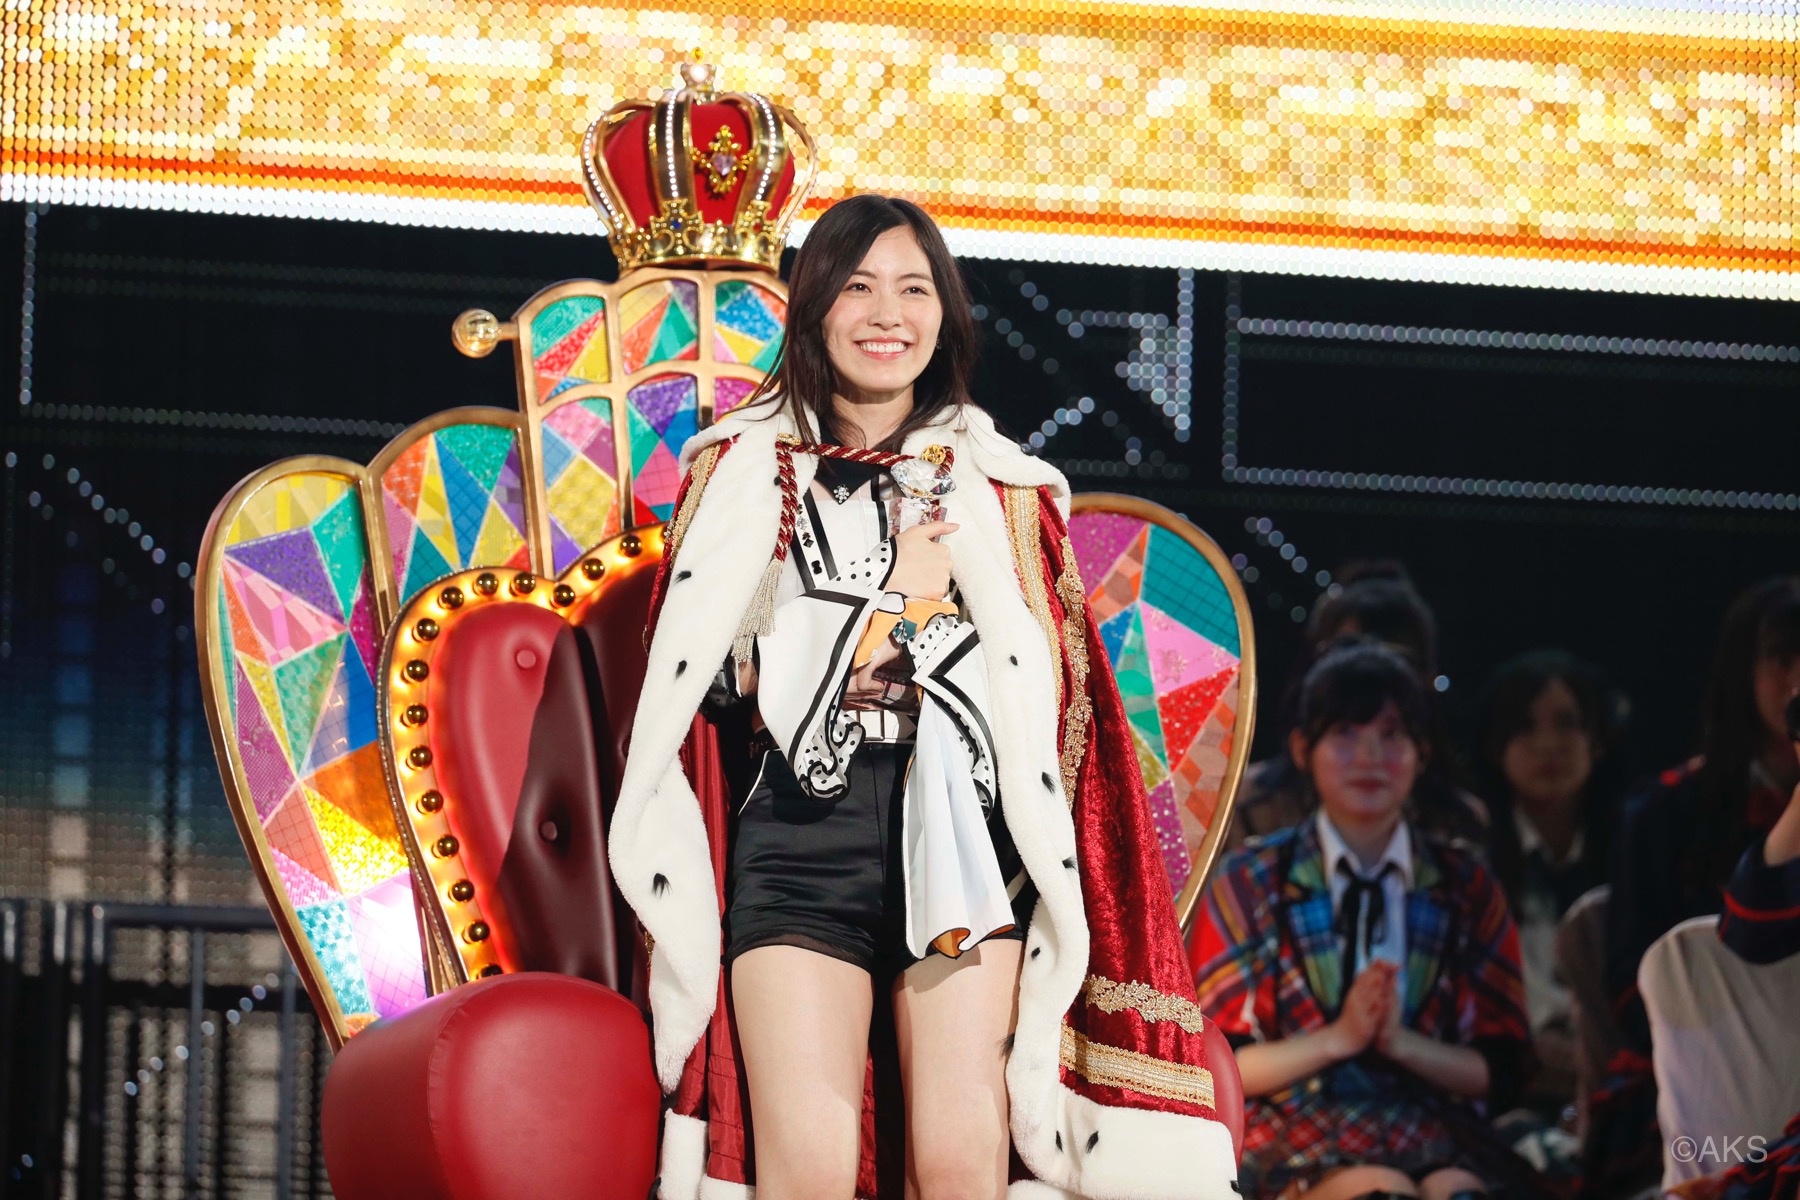 Jurina Matsui Crowned the Center of the World! SKE48 Claims Top Two Spots at AKB48 World Senbatsu Sousenkyo in Hometown Nagoya!